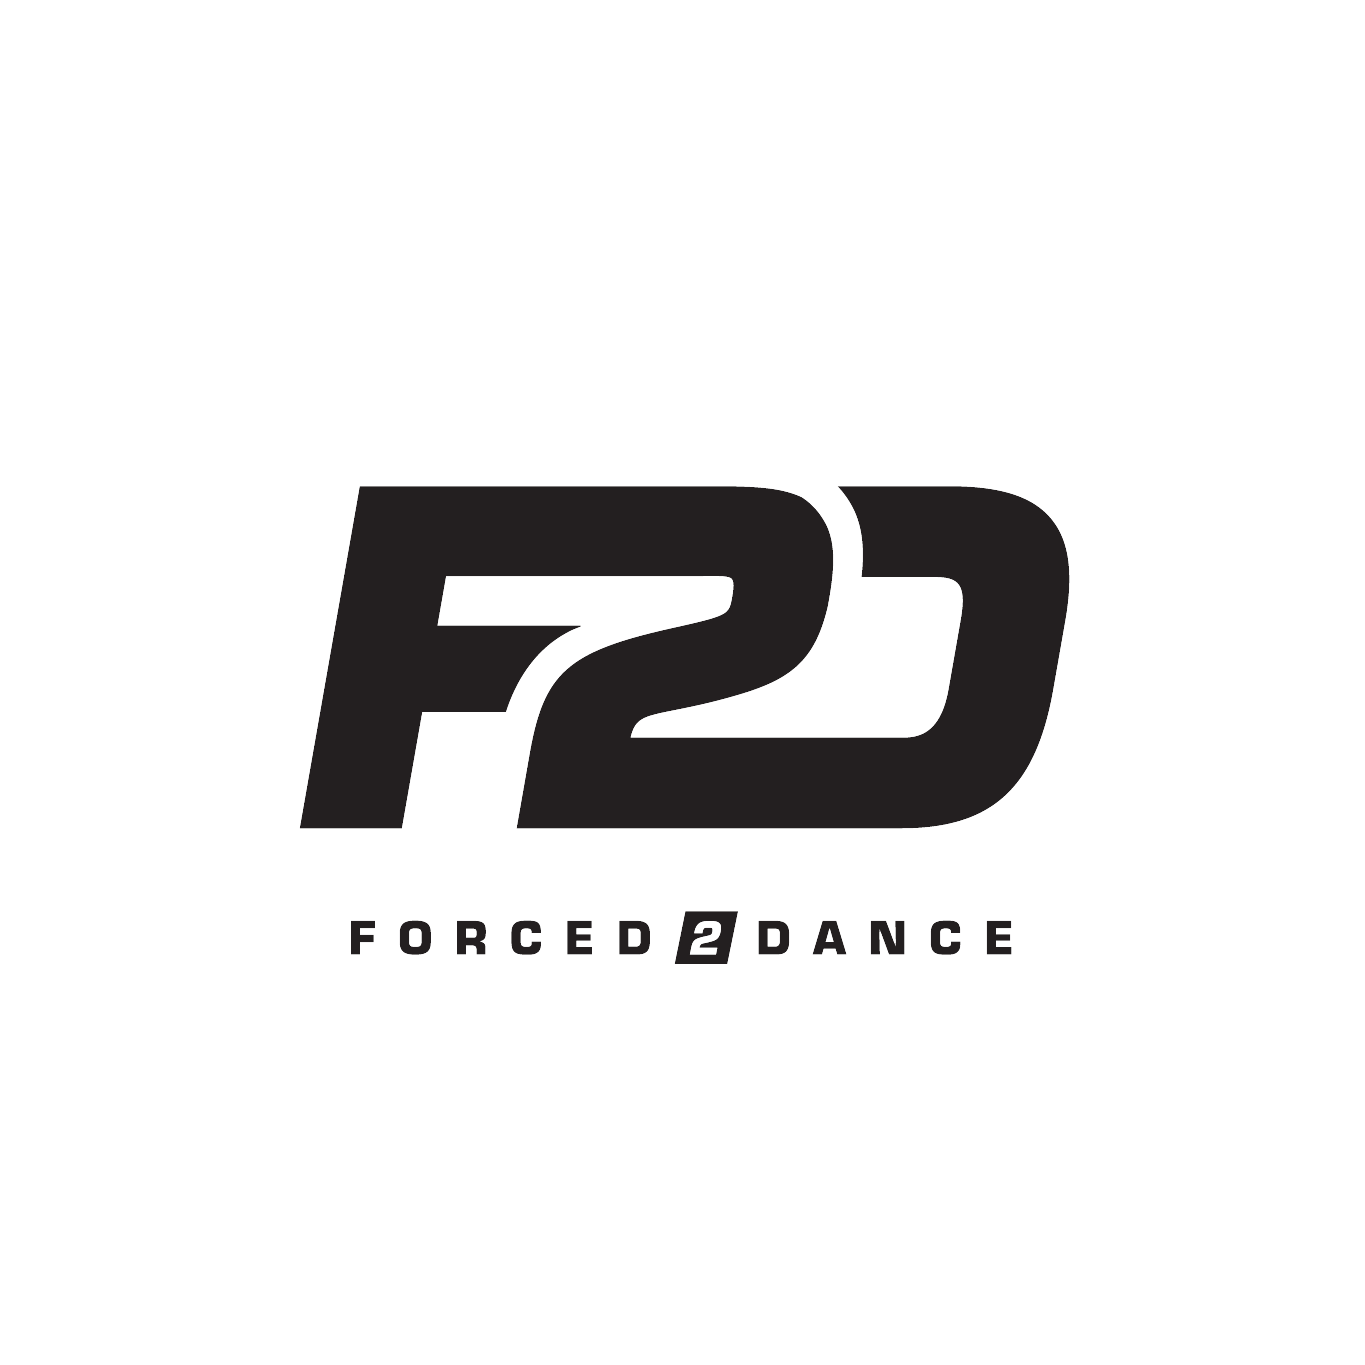 F2D / Forced 2 Dance